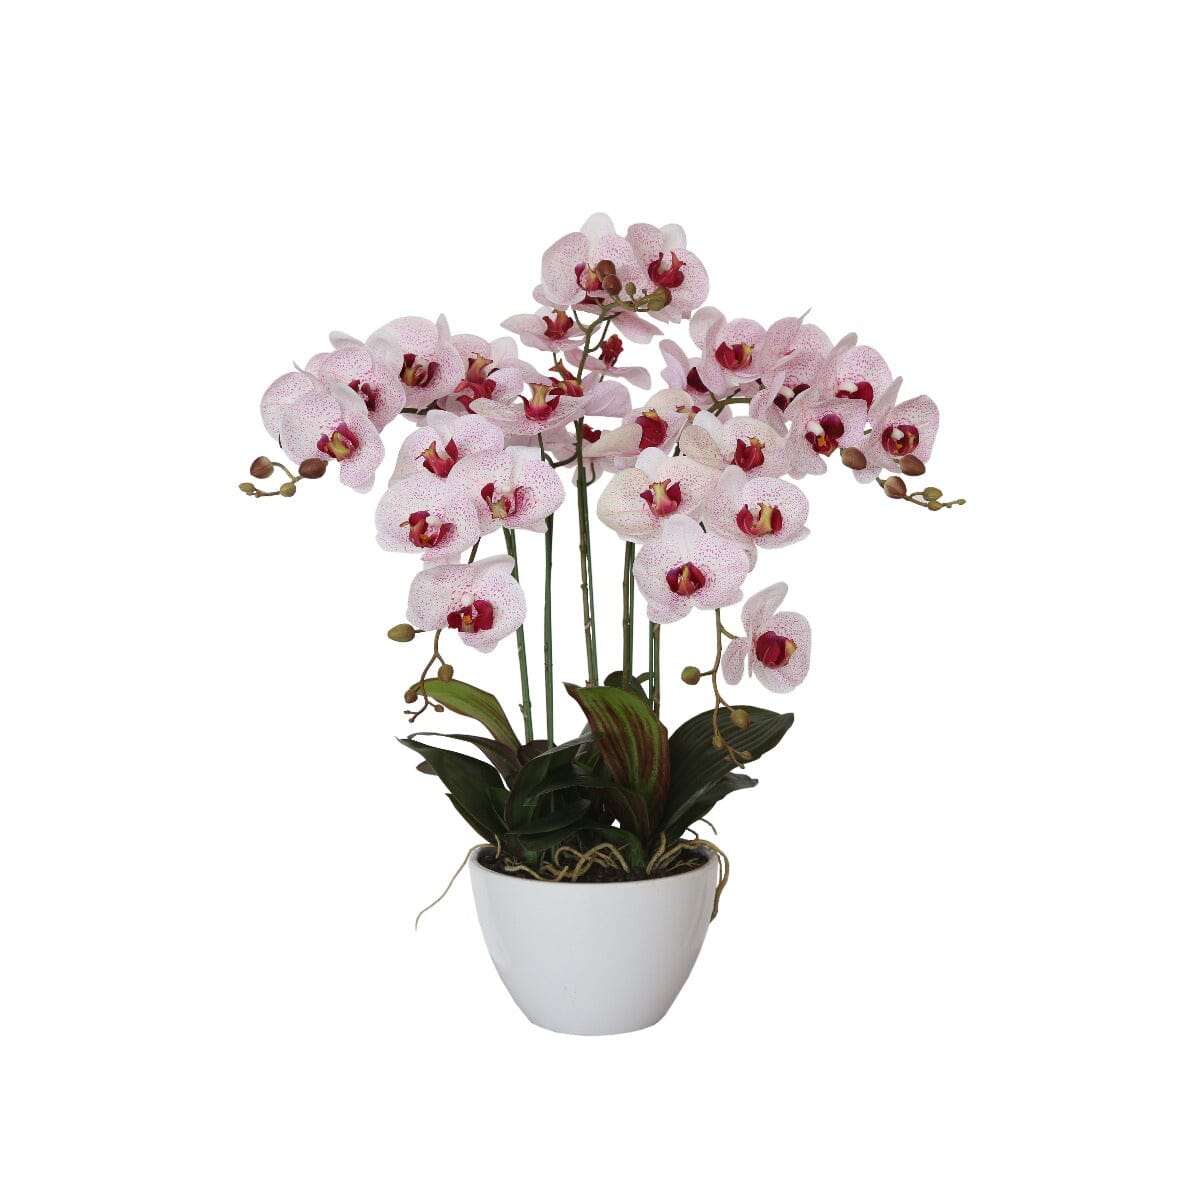 66cm Multi Butterfly Orchid - Pink Home & Garden ArtificialPlantBarn.com.au 